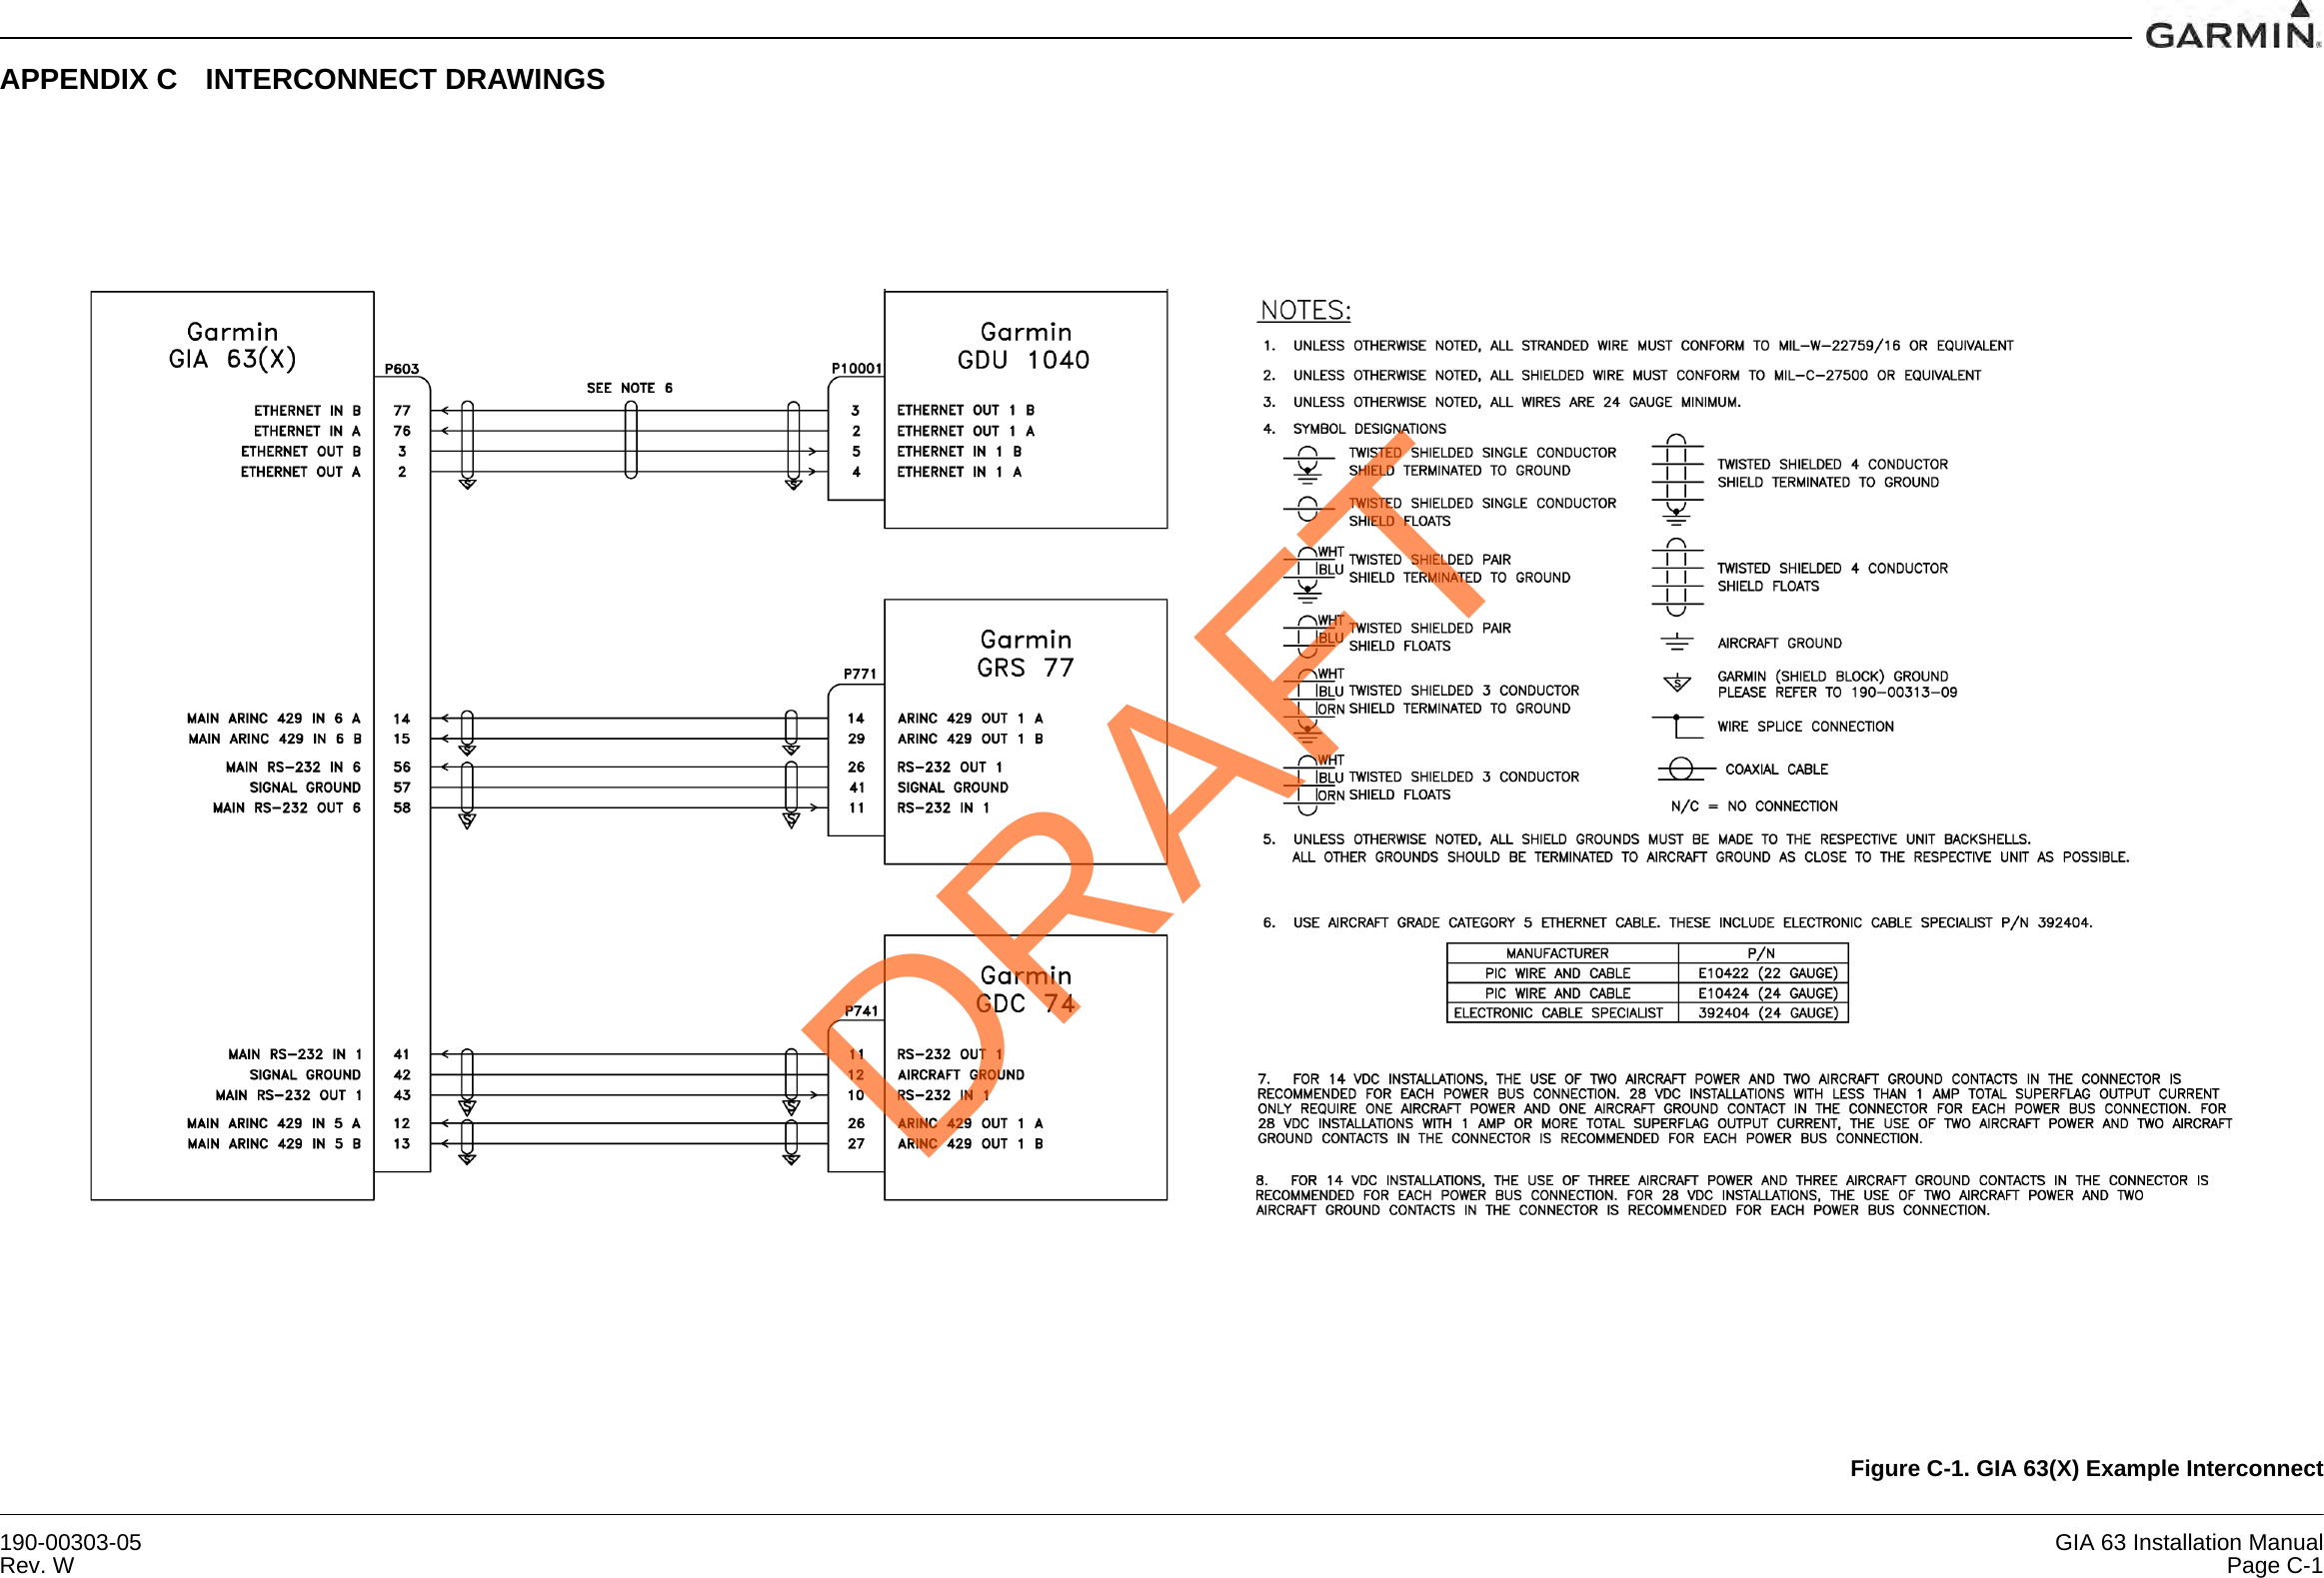 190-00303-05 GIA 63 Installation ManualRev. W Page C-1APPENDIX C INTERCONNECT DRAWINGSFigure C-1. GIA 63(X) Example InterconnectDRAFT